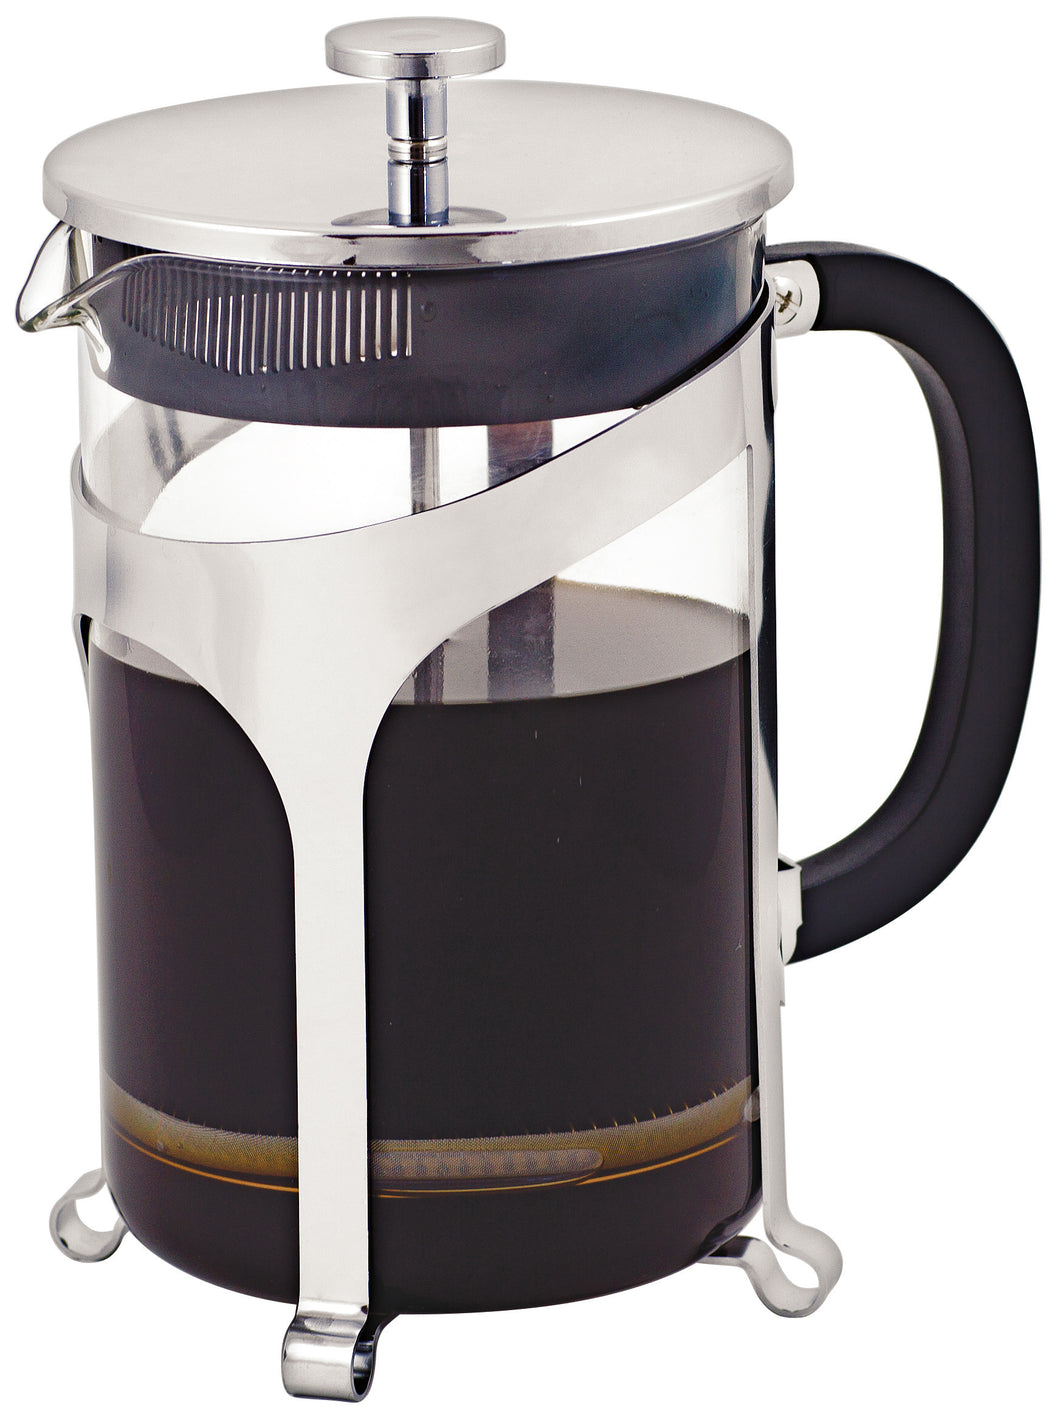 Avanti Cafe Press Coffee Plunger 12 cup